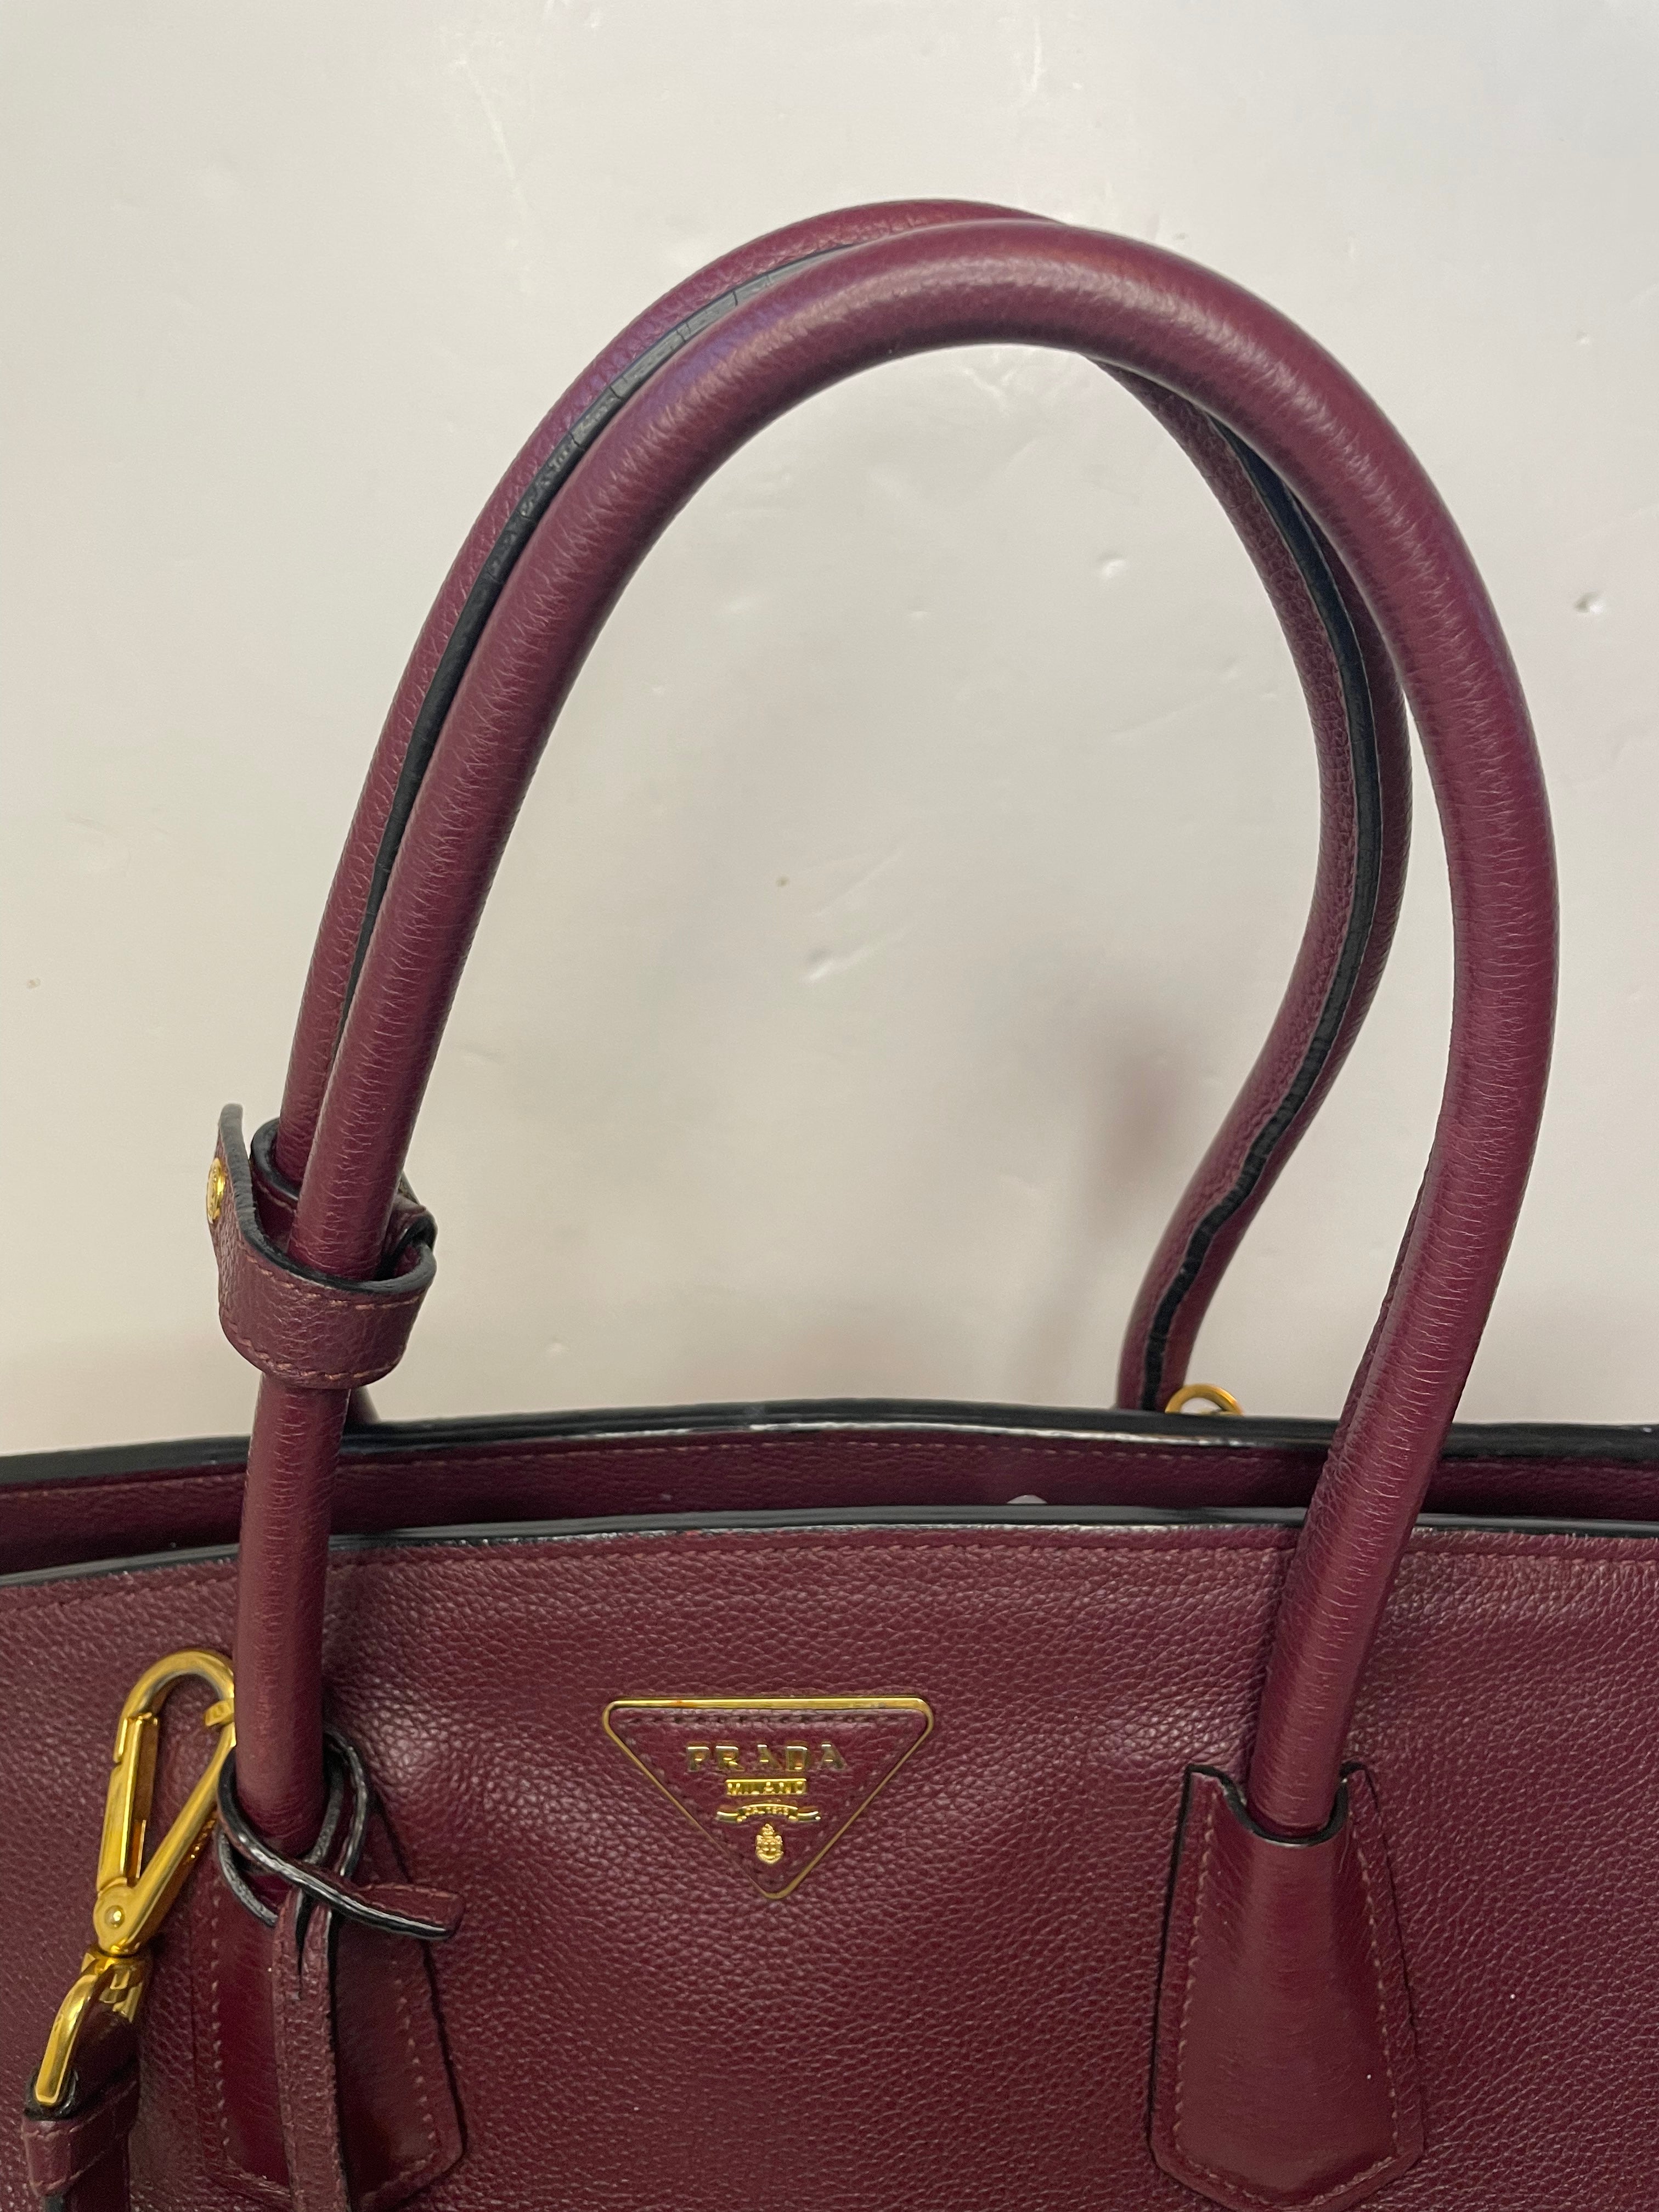 Packshot Factory - Fashion Photography - Prada leather handbag